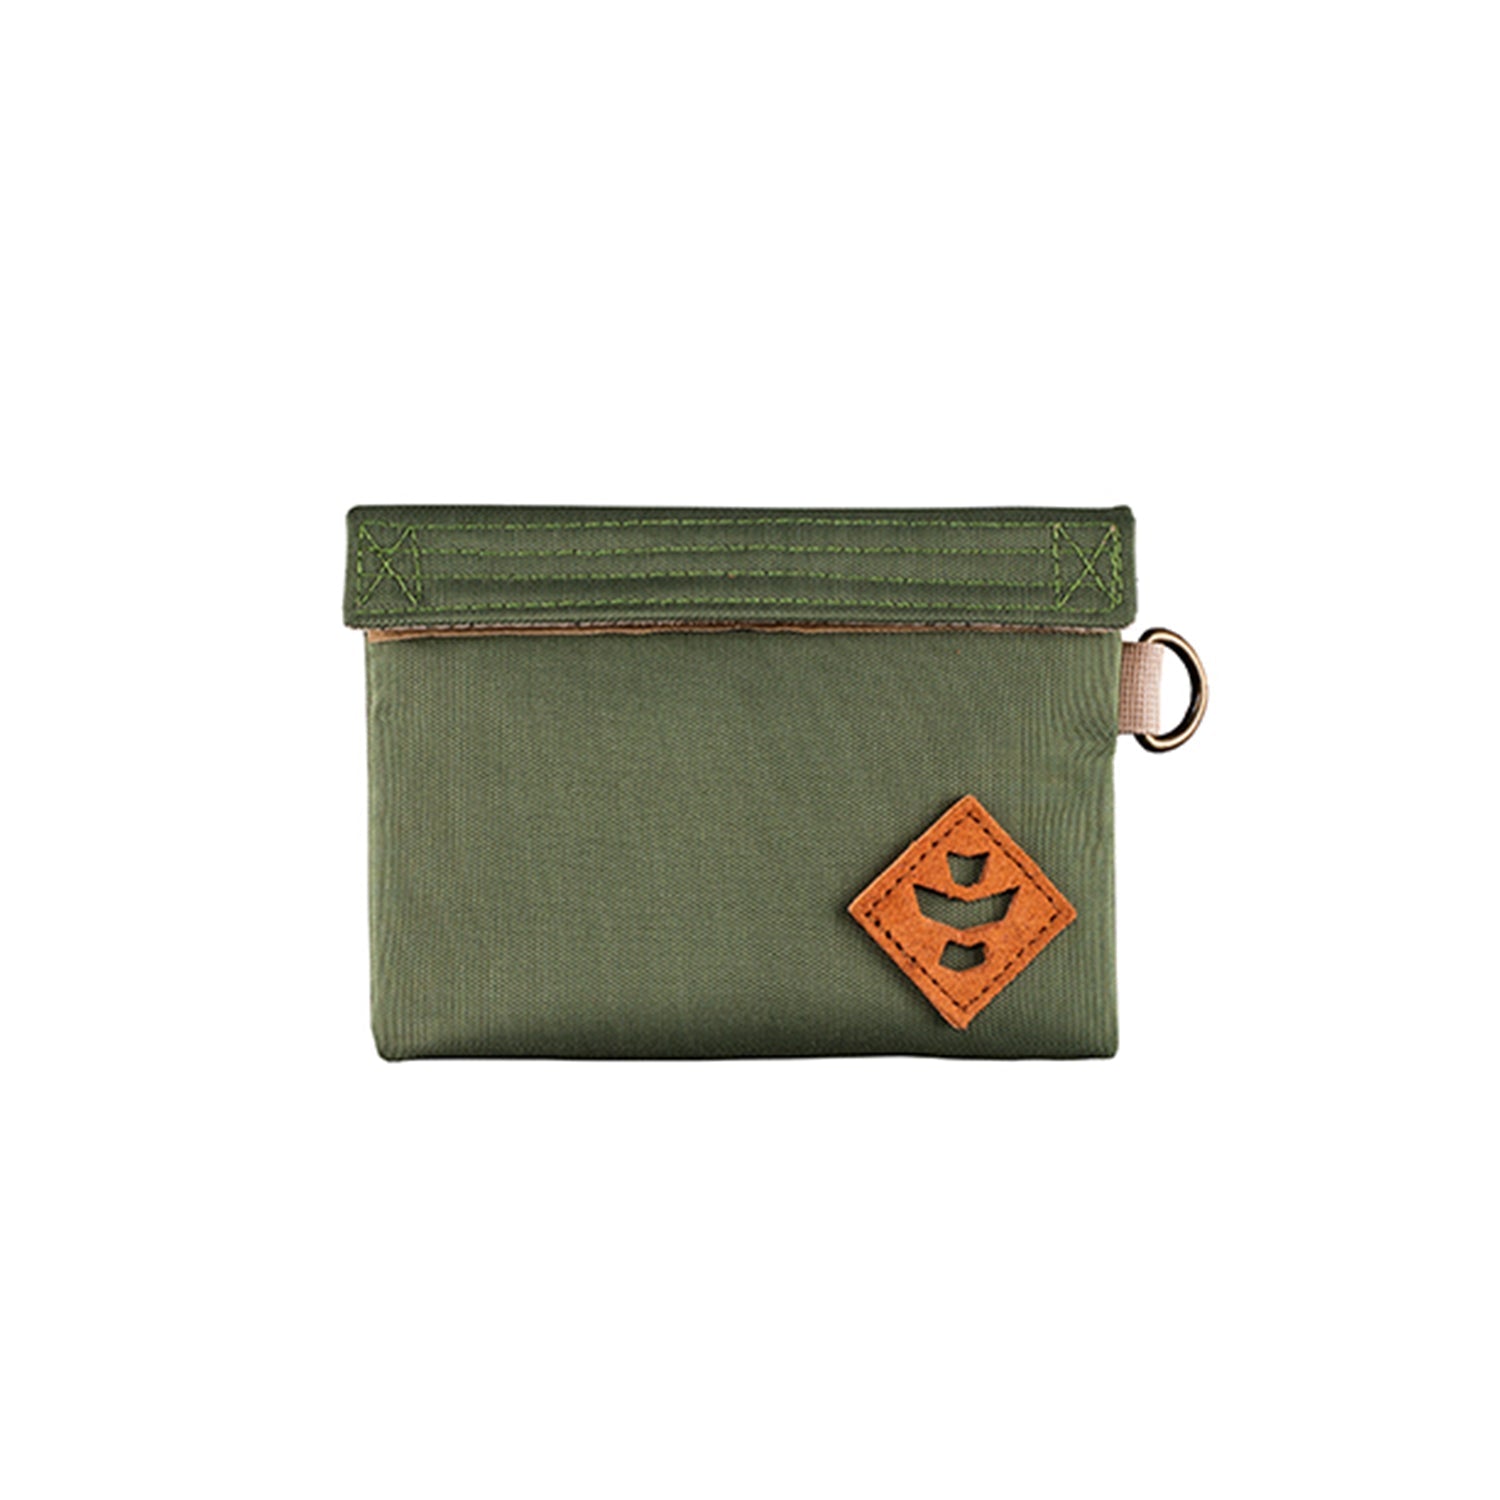 Green The Mini Confidant - Smell Proof Small Stash Bag